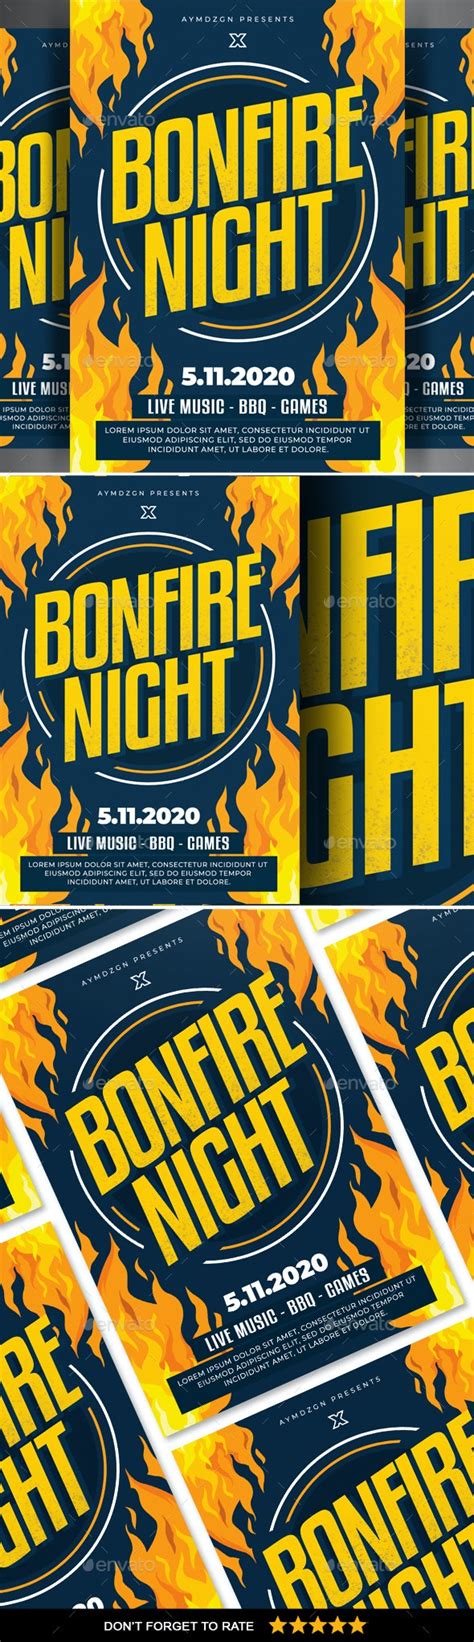 Bonfire Night Flyer Print Templates Graphicriver